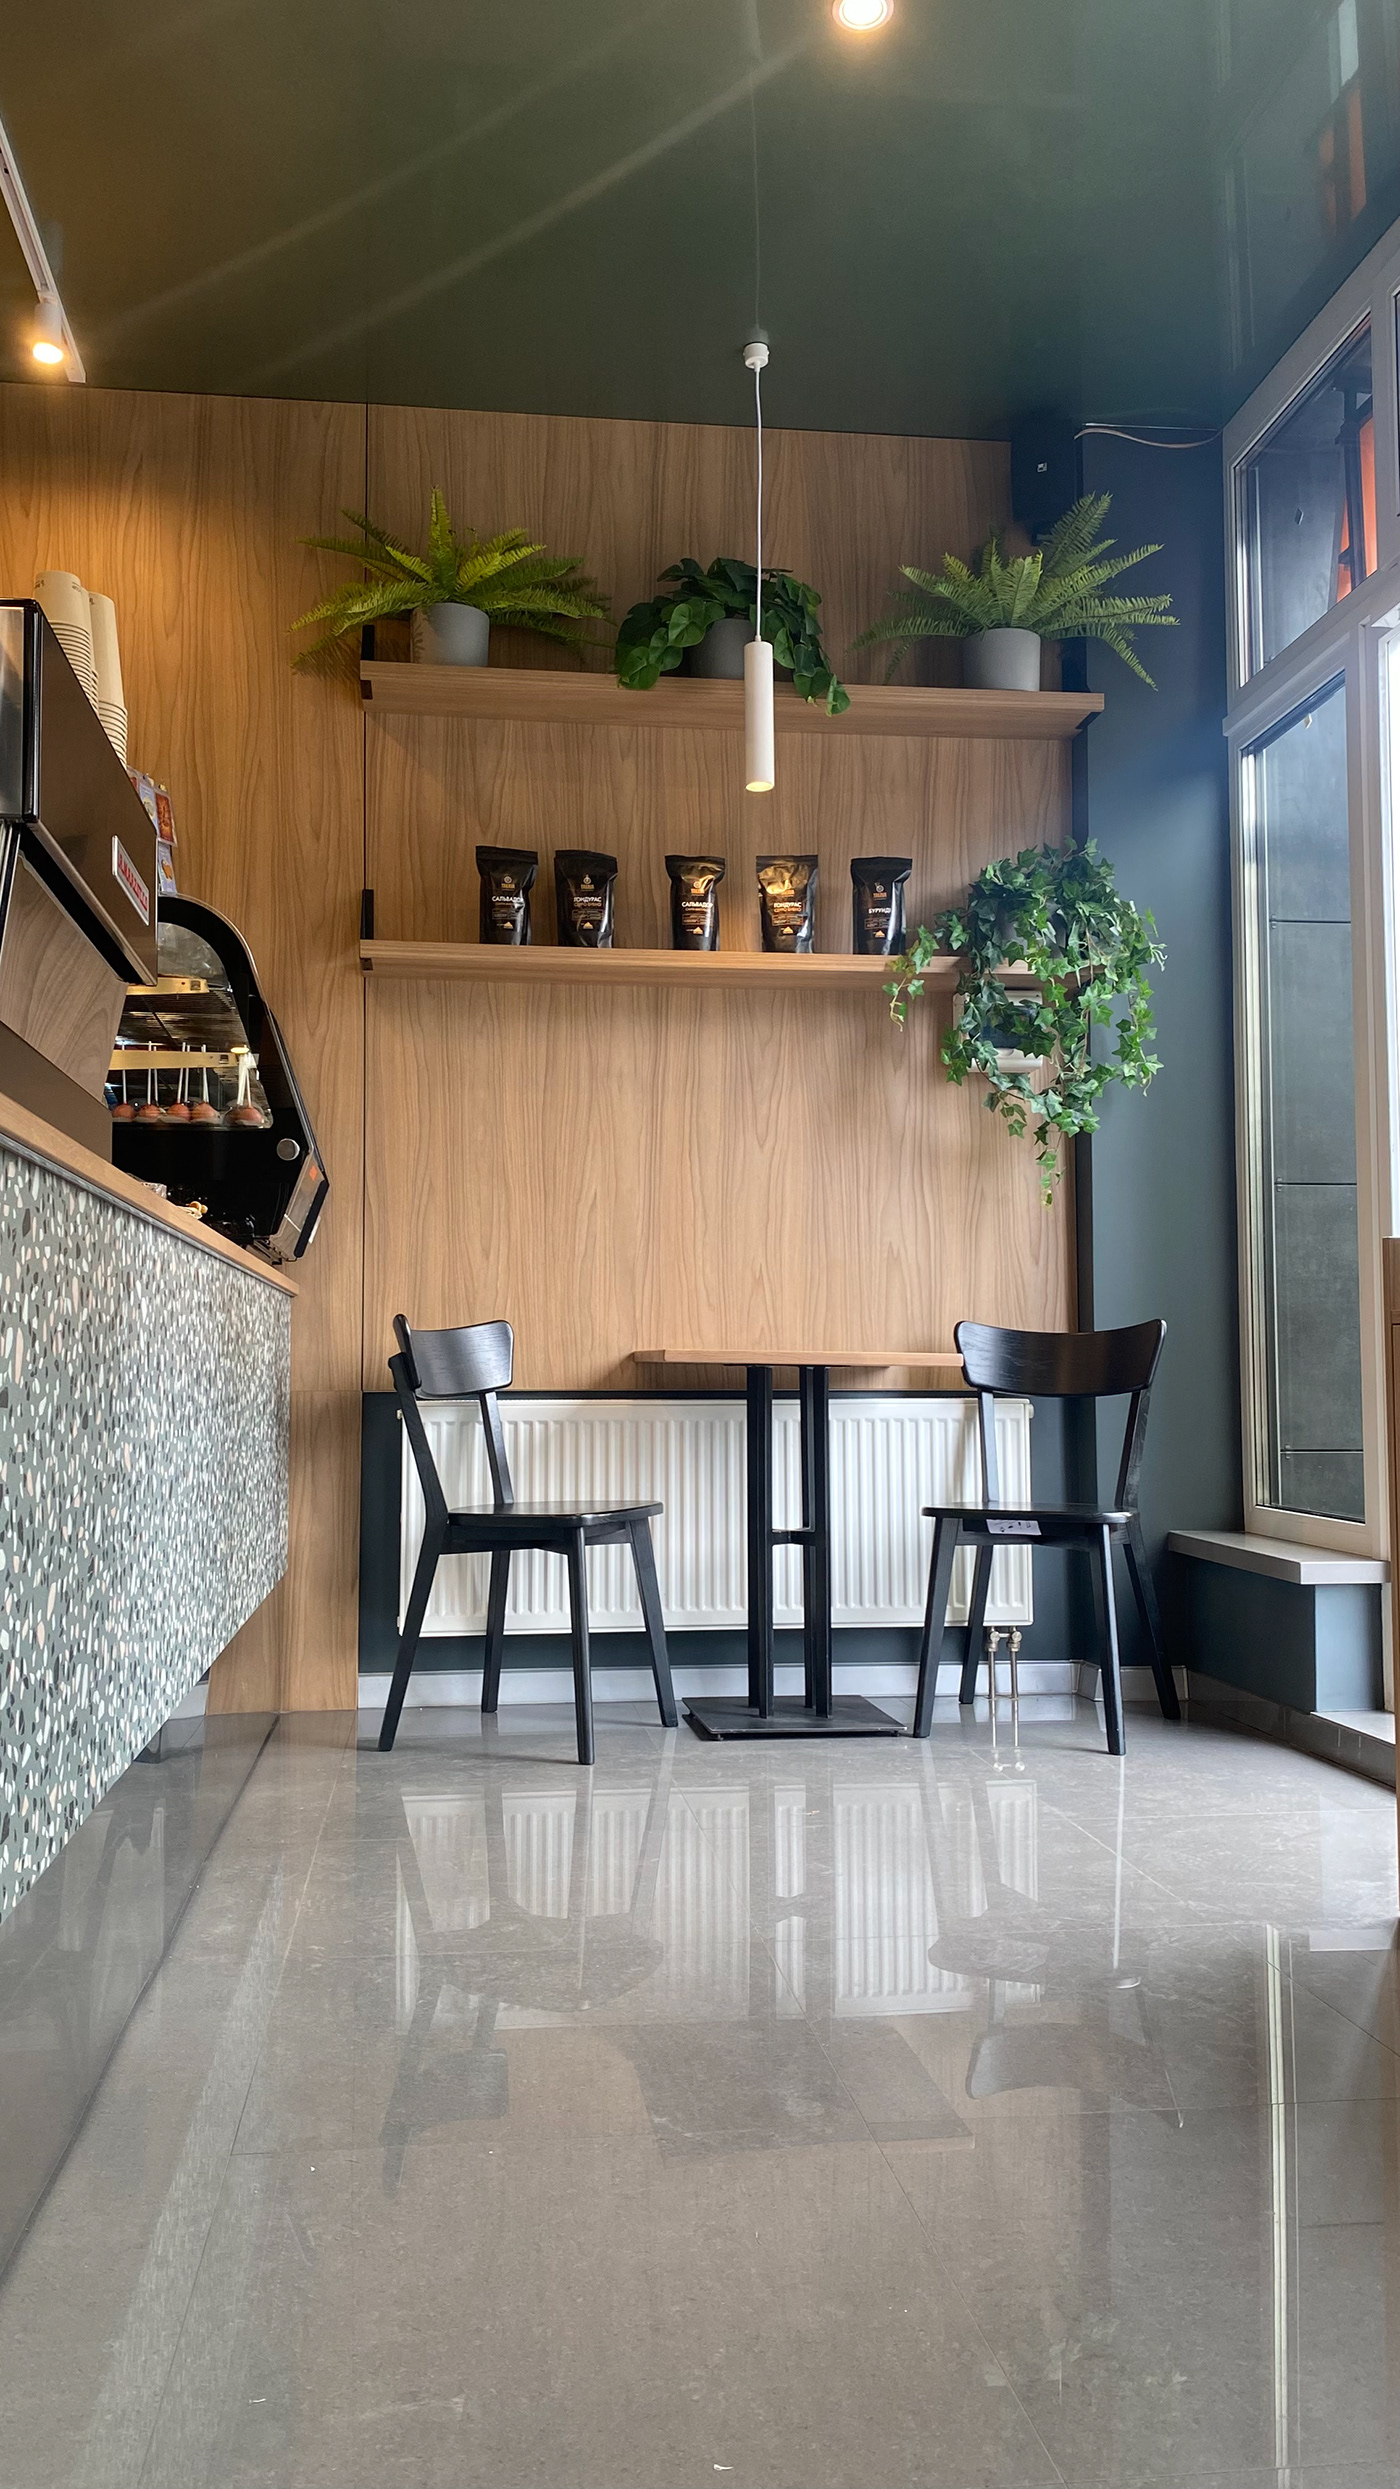 caffetteria interior design  Medley design studio kyiv Saviola sudilovska Vyshgorod